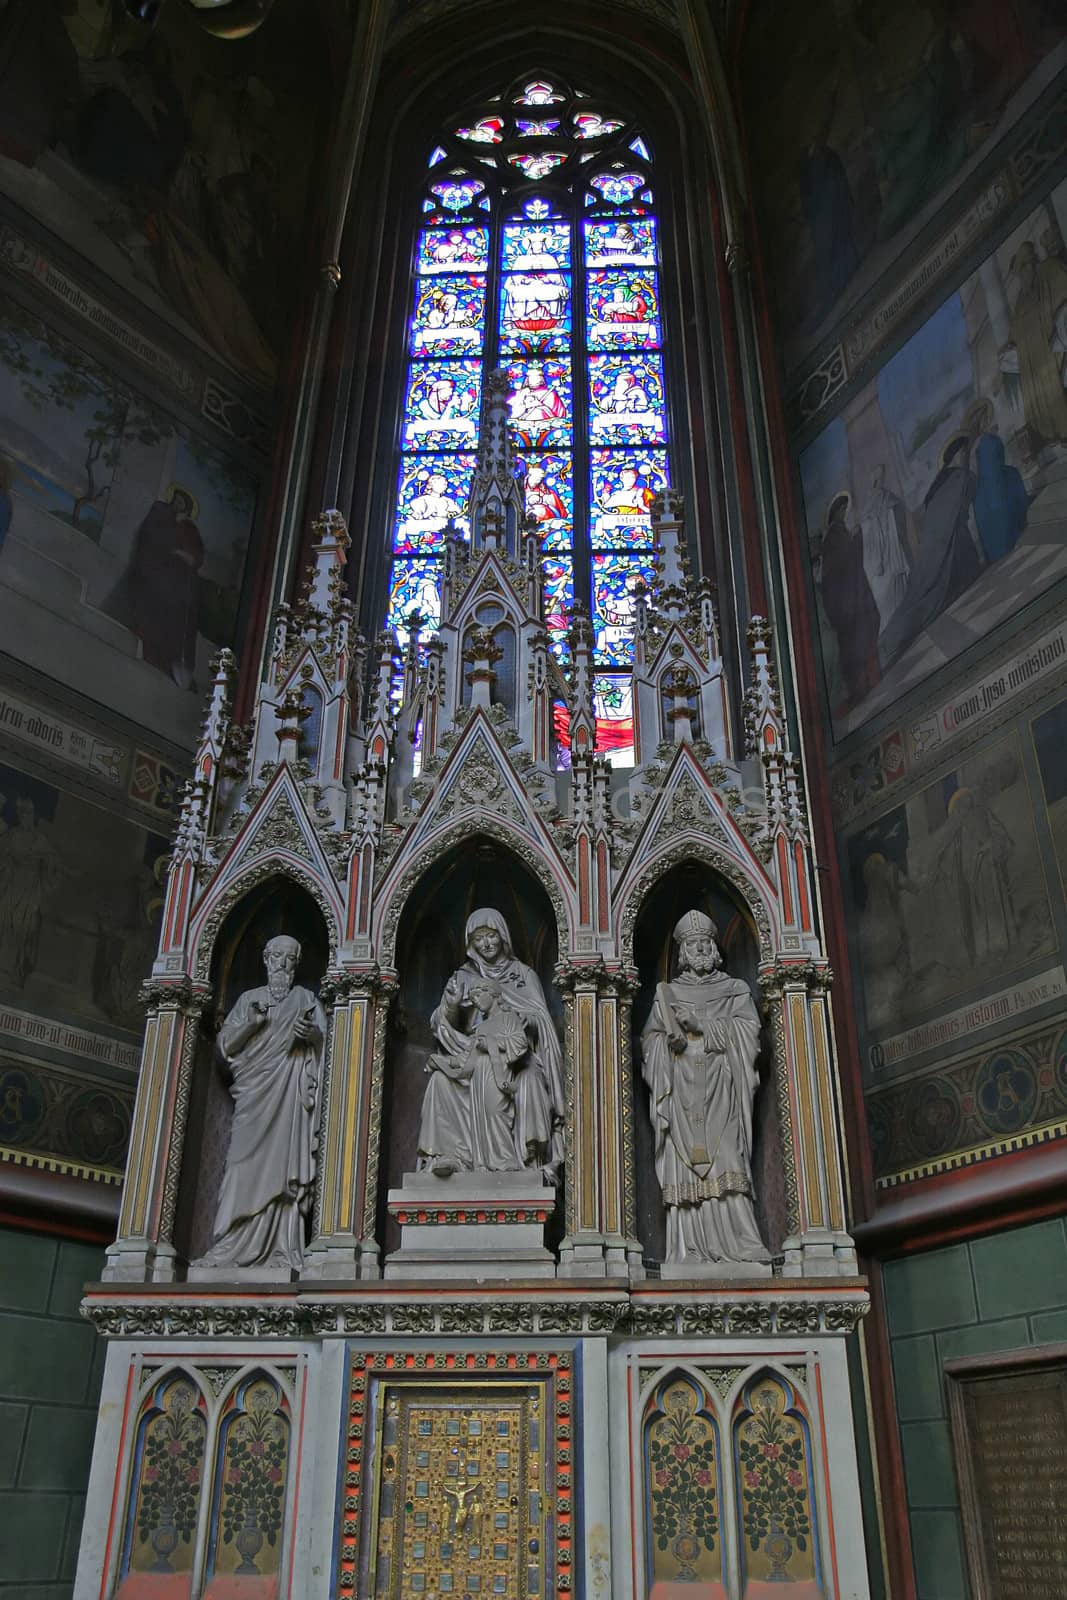 St Vitus interiors by LoonChild